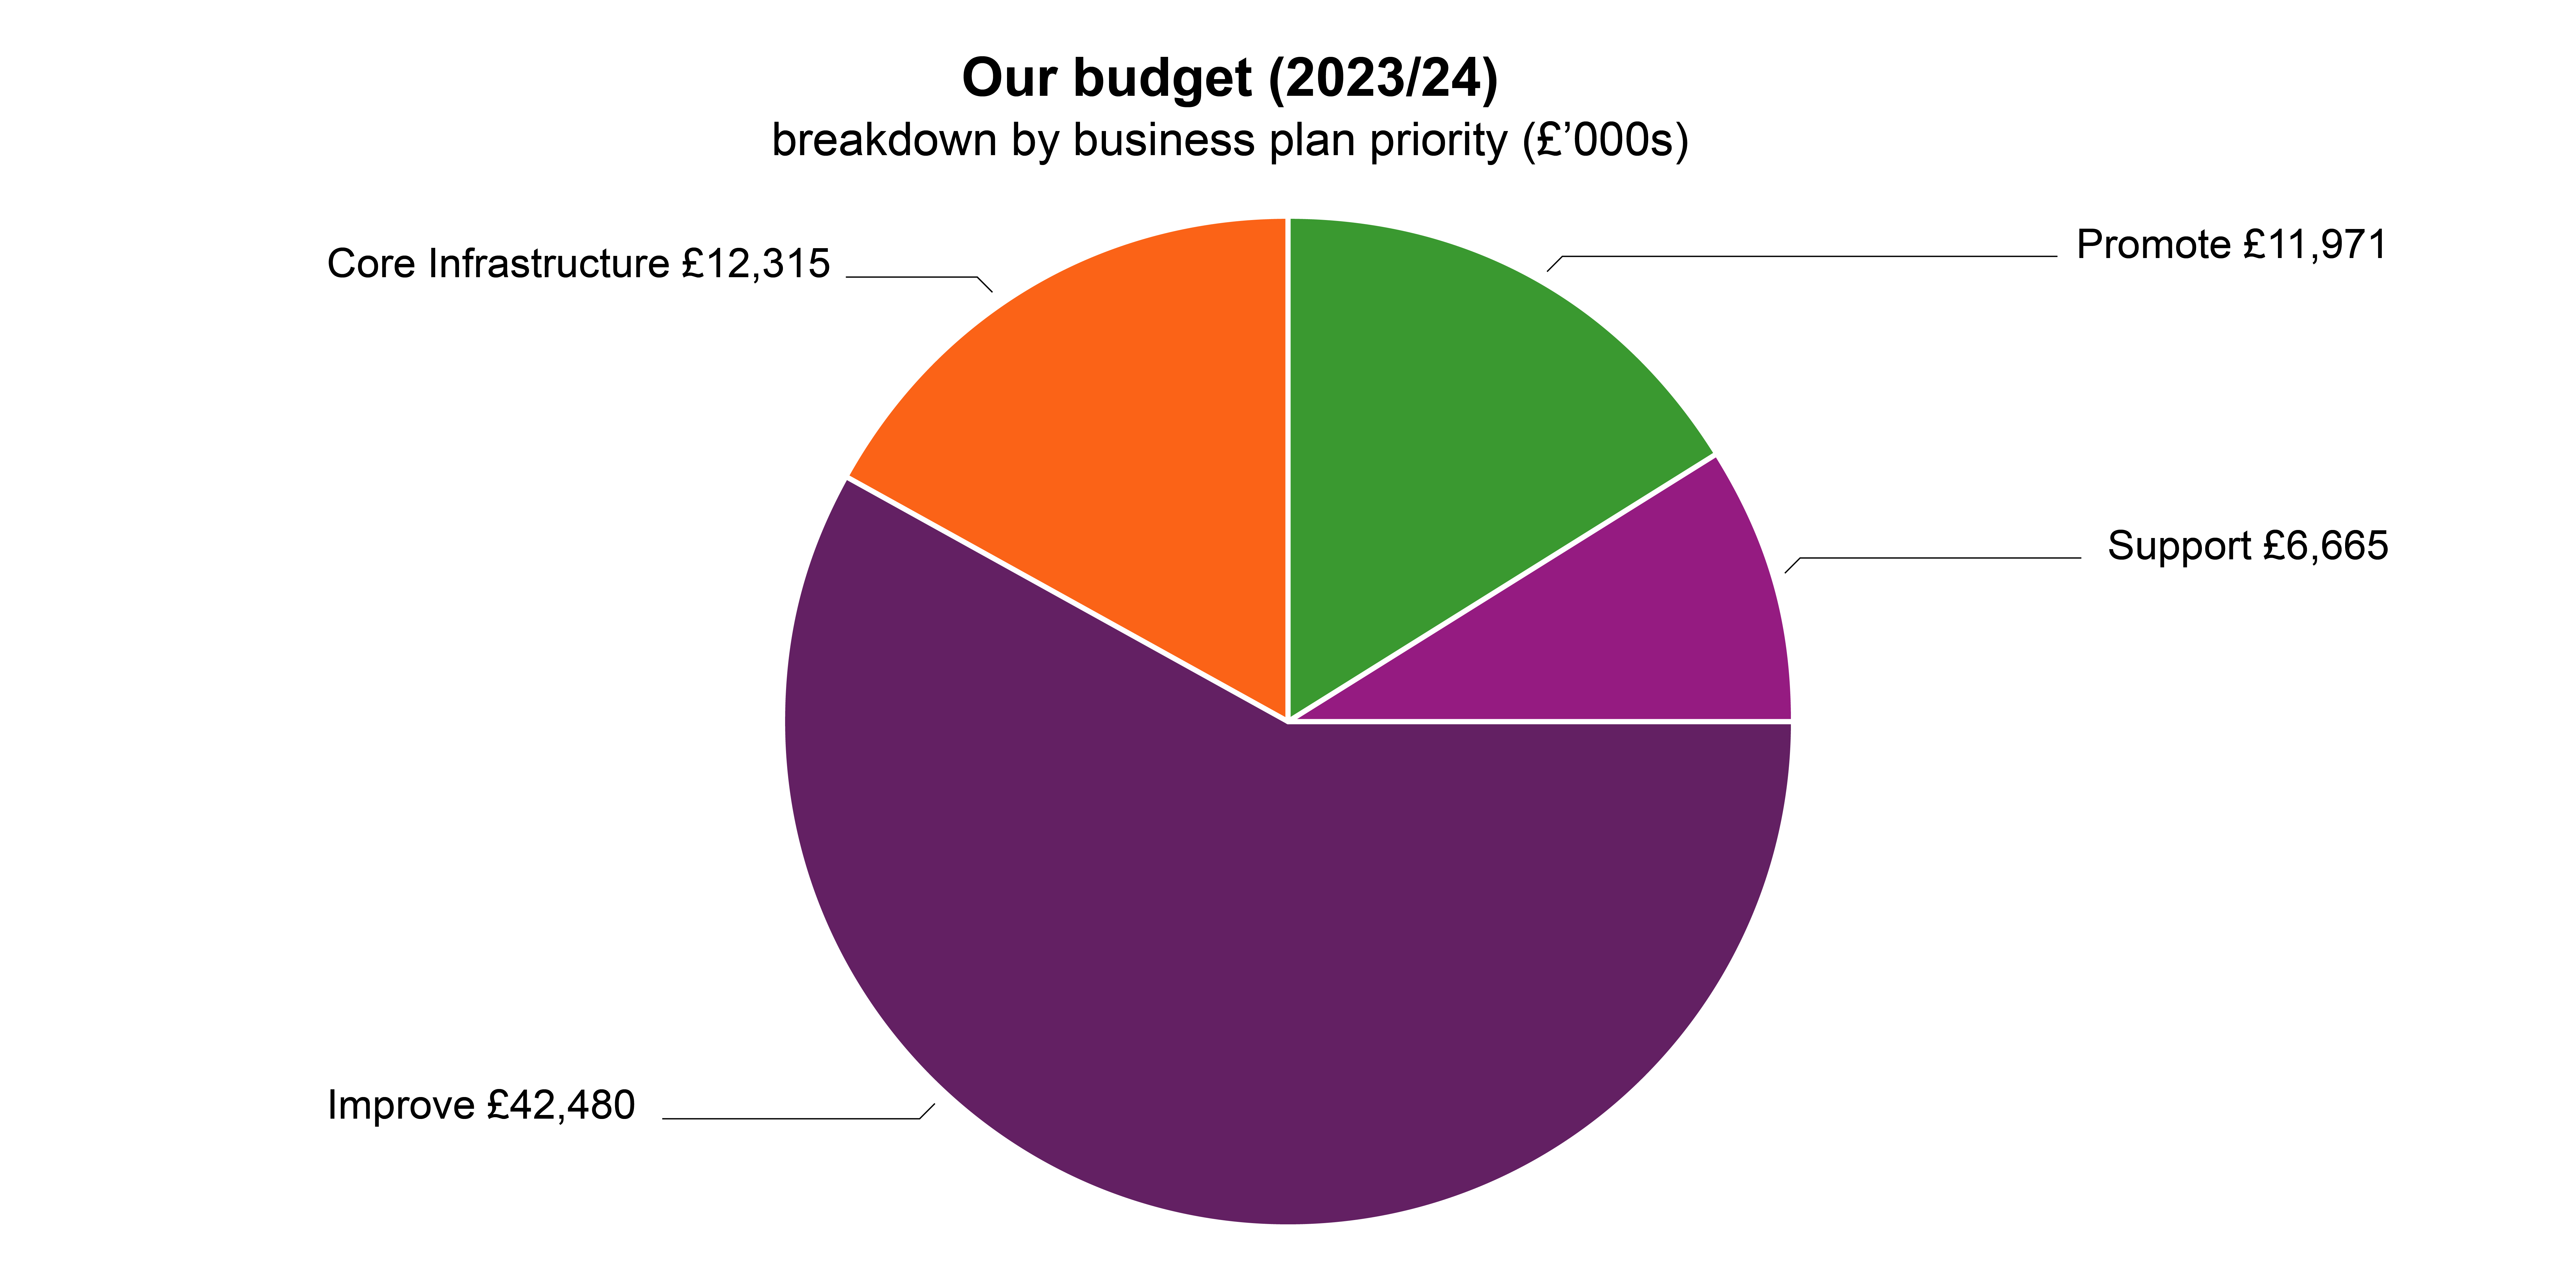 LGA's budget breakdown by business plan priority